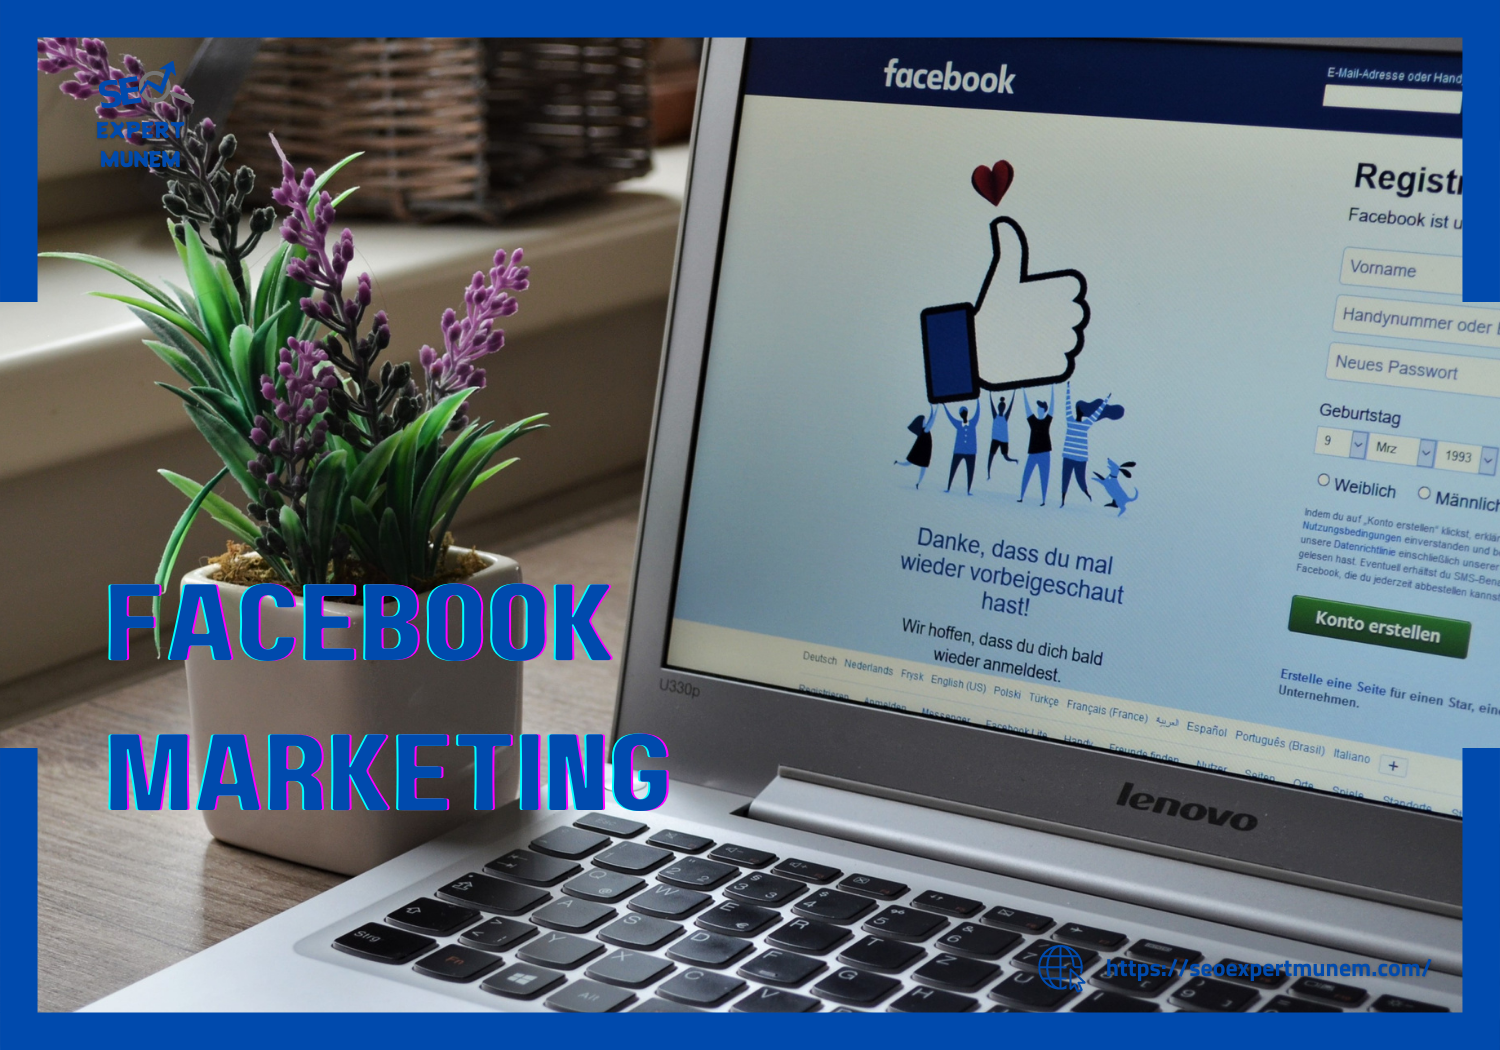 How Many Types of Facebook Marketing?